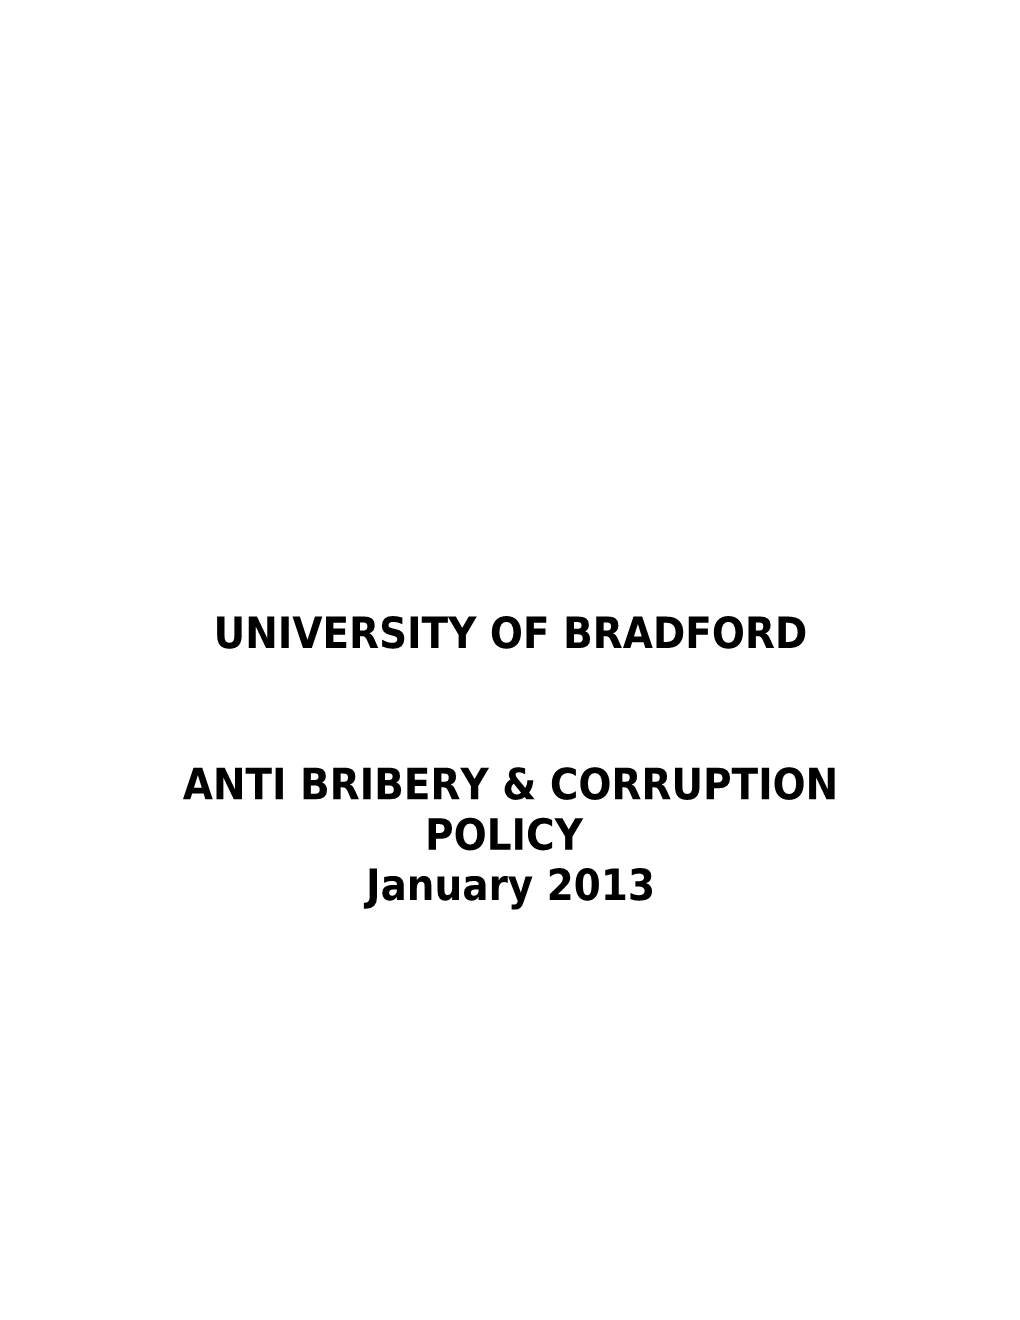 University of Bradford Anti Bribery & Corruption Policy